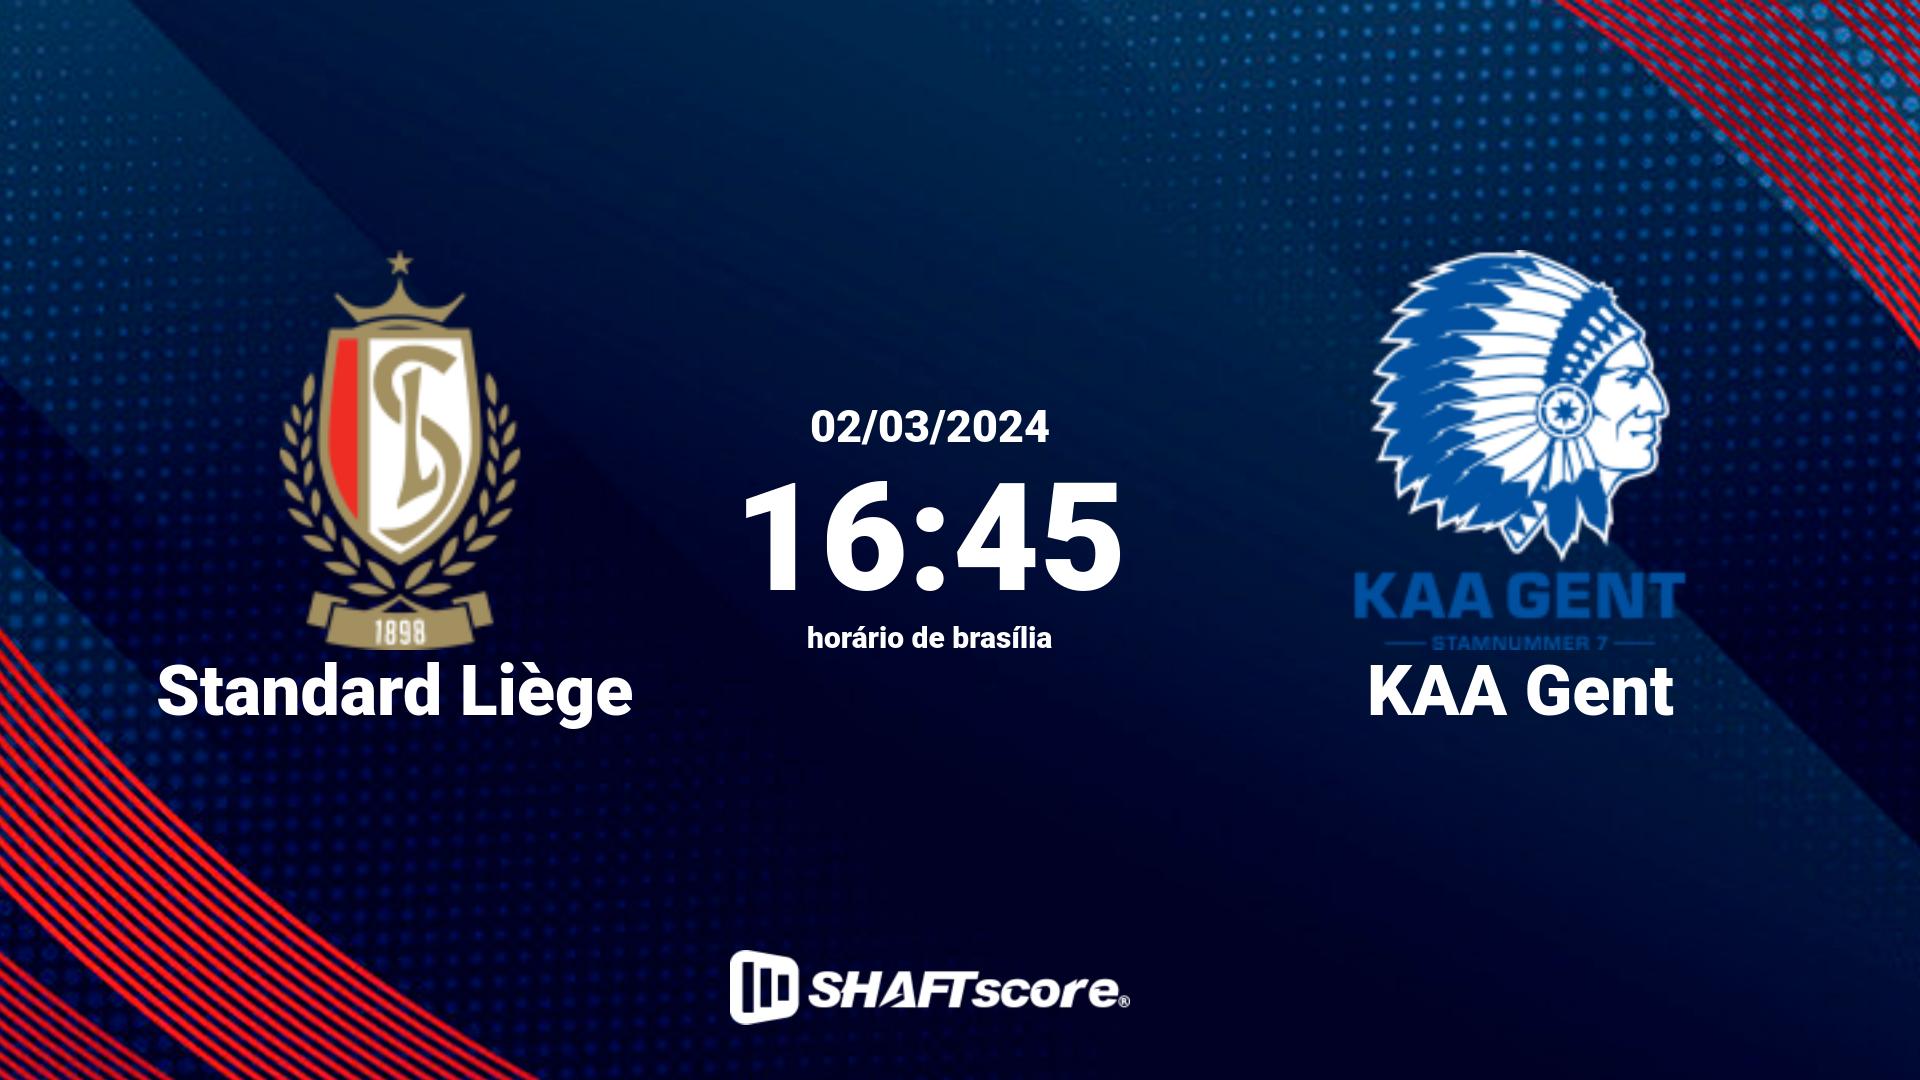 Estatísticas do jogo Standard Liège vs KAA Gent 02.03 16:45